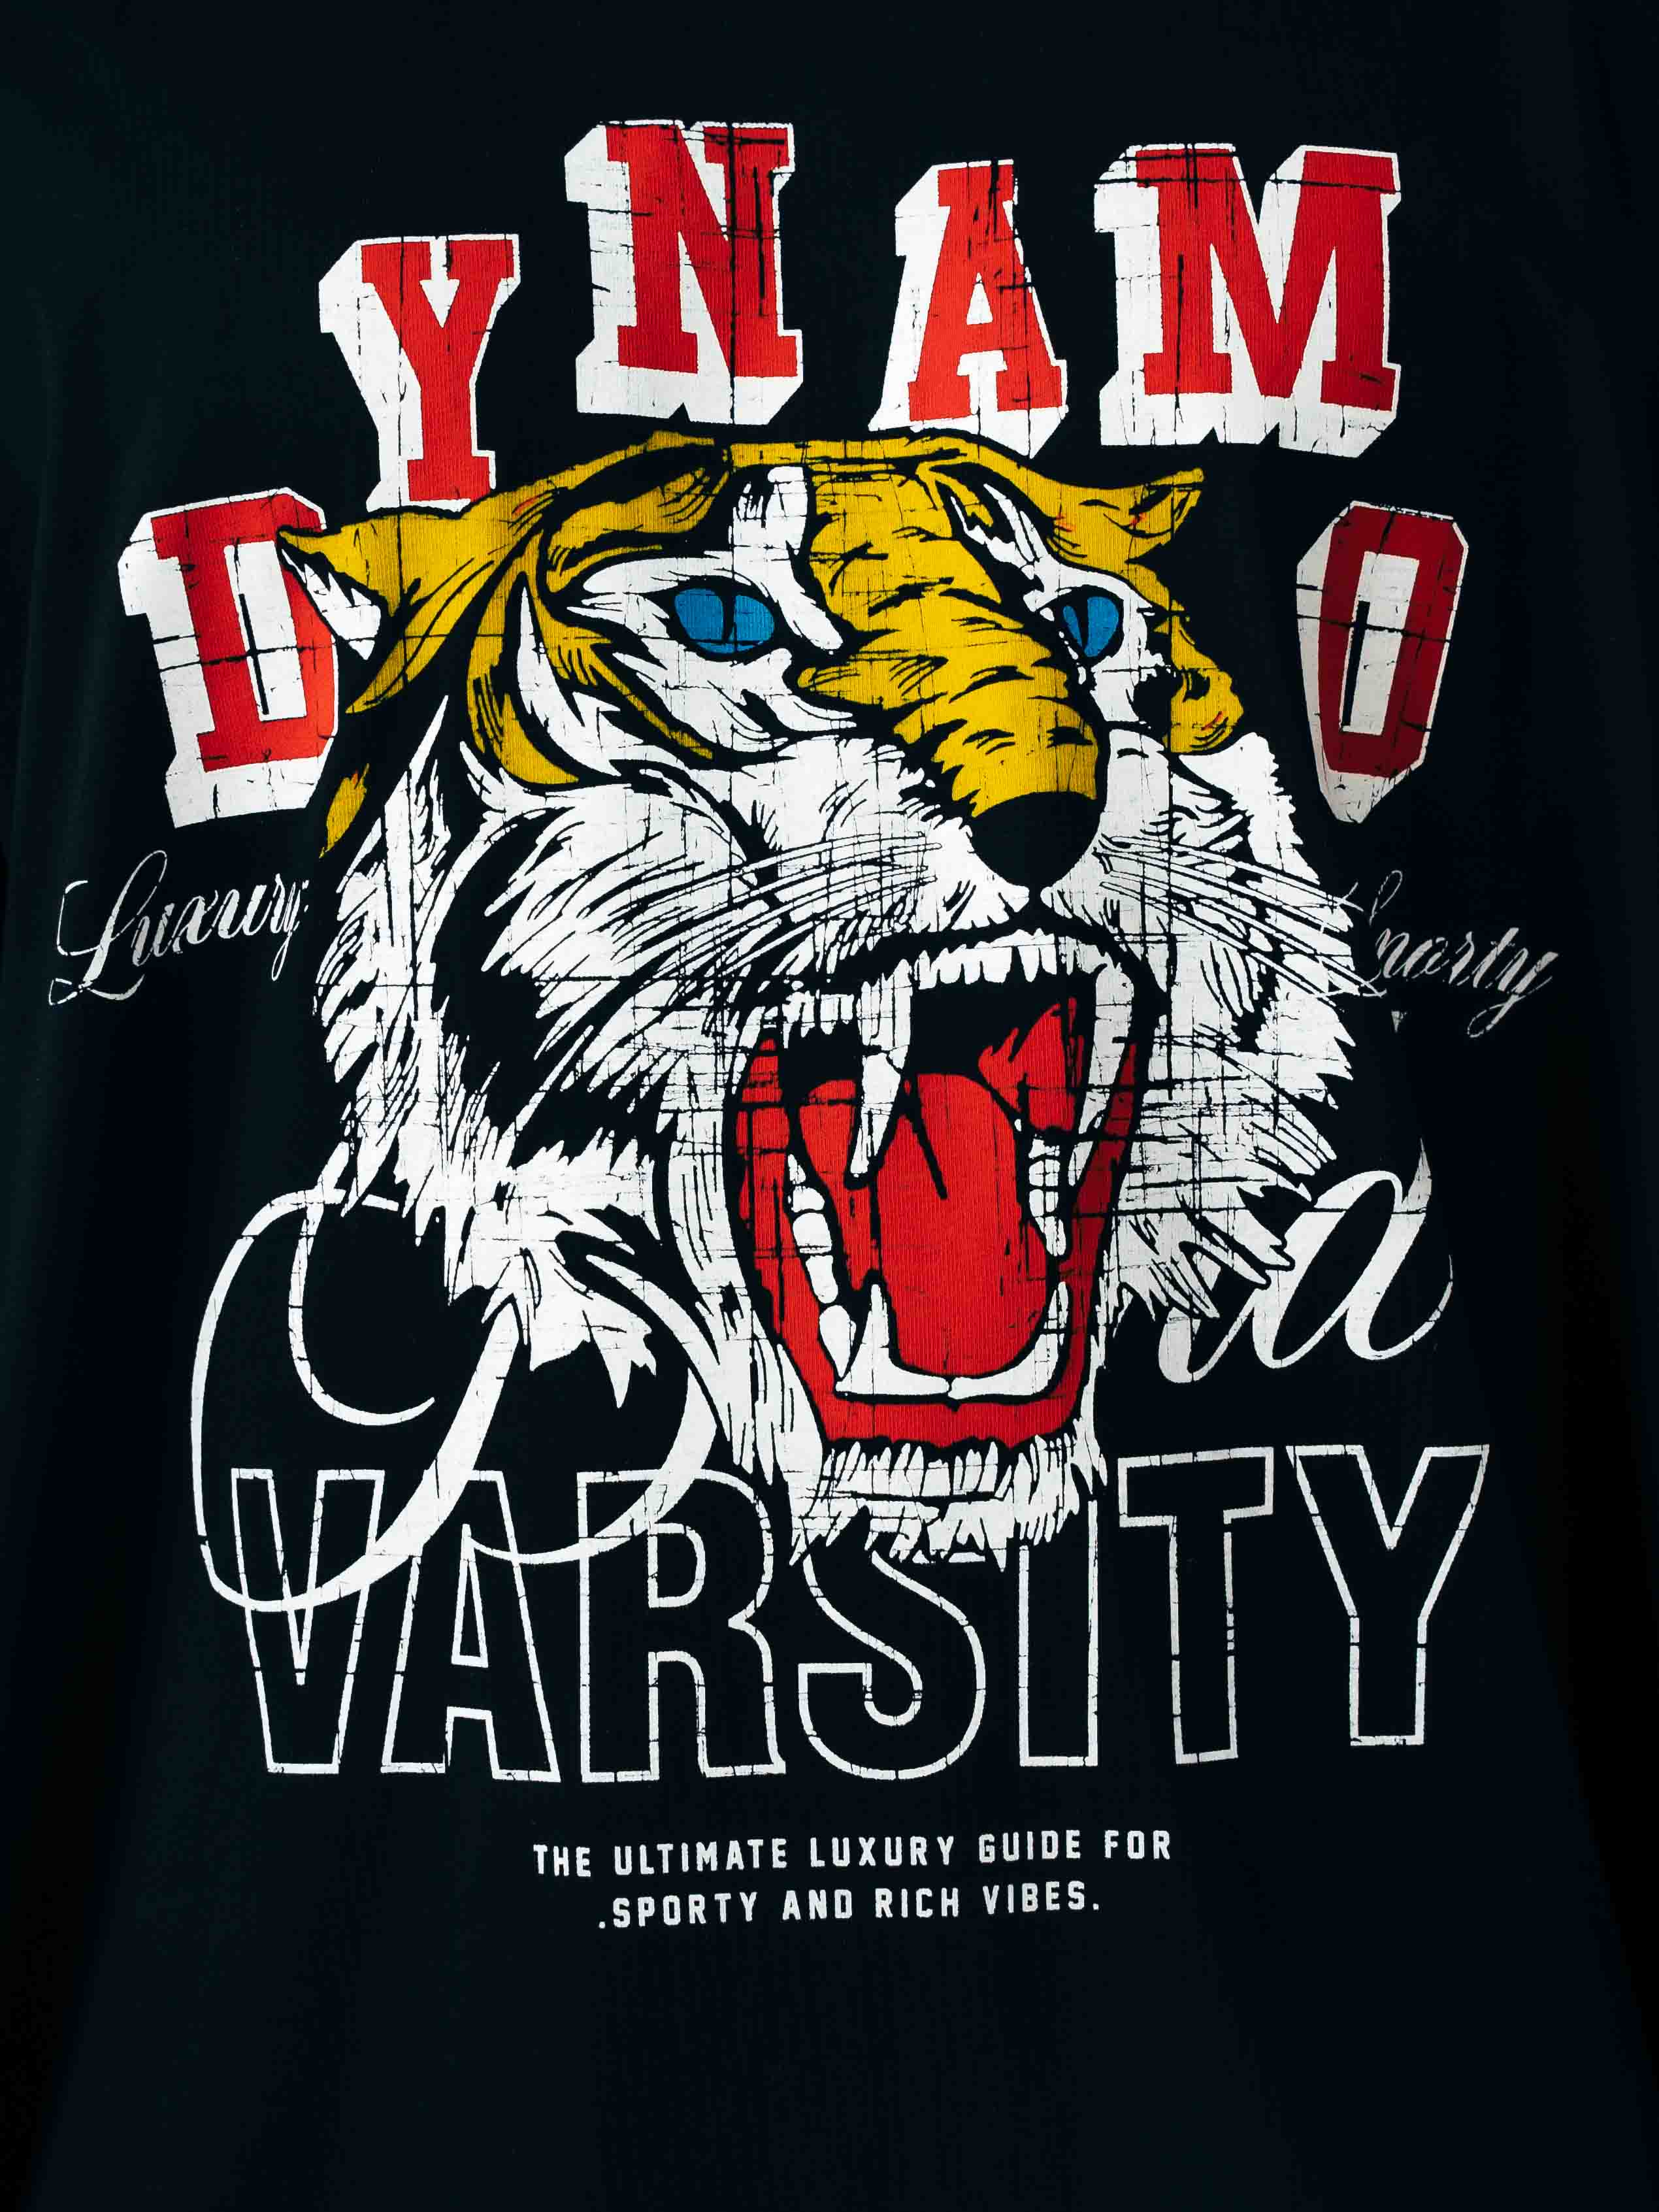 Camiseta Oversize Negra Dynamo Varsity